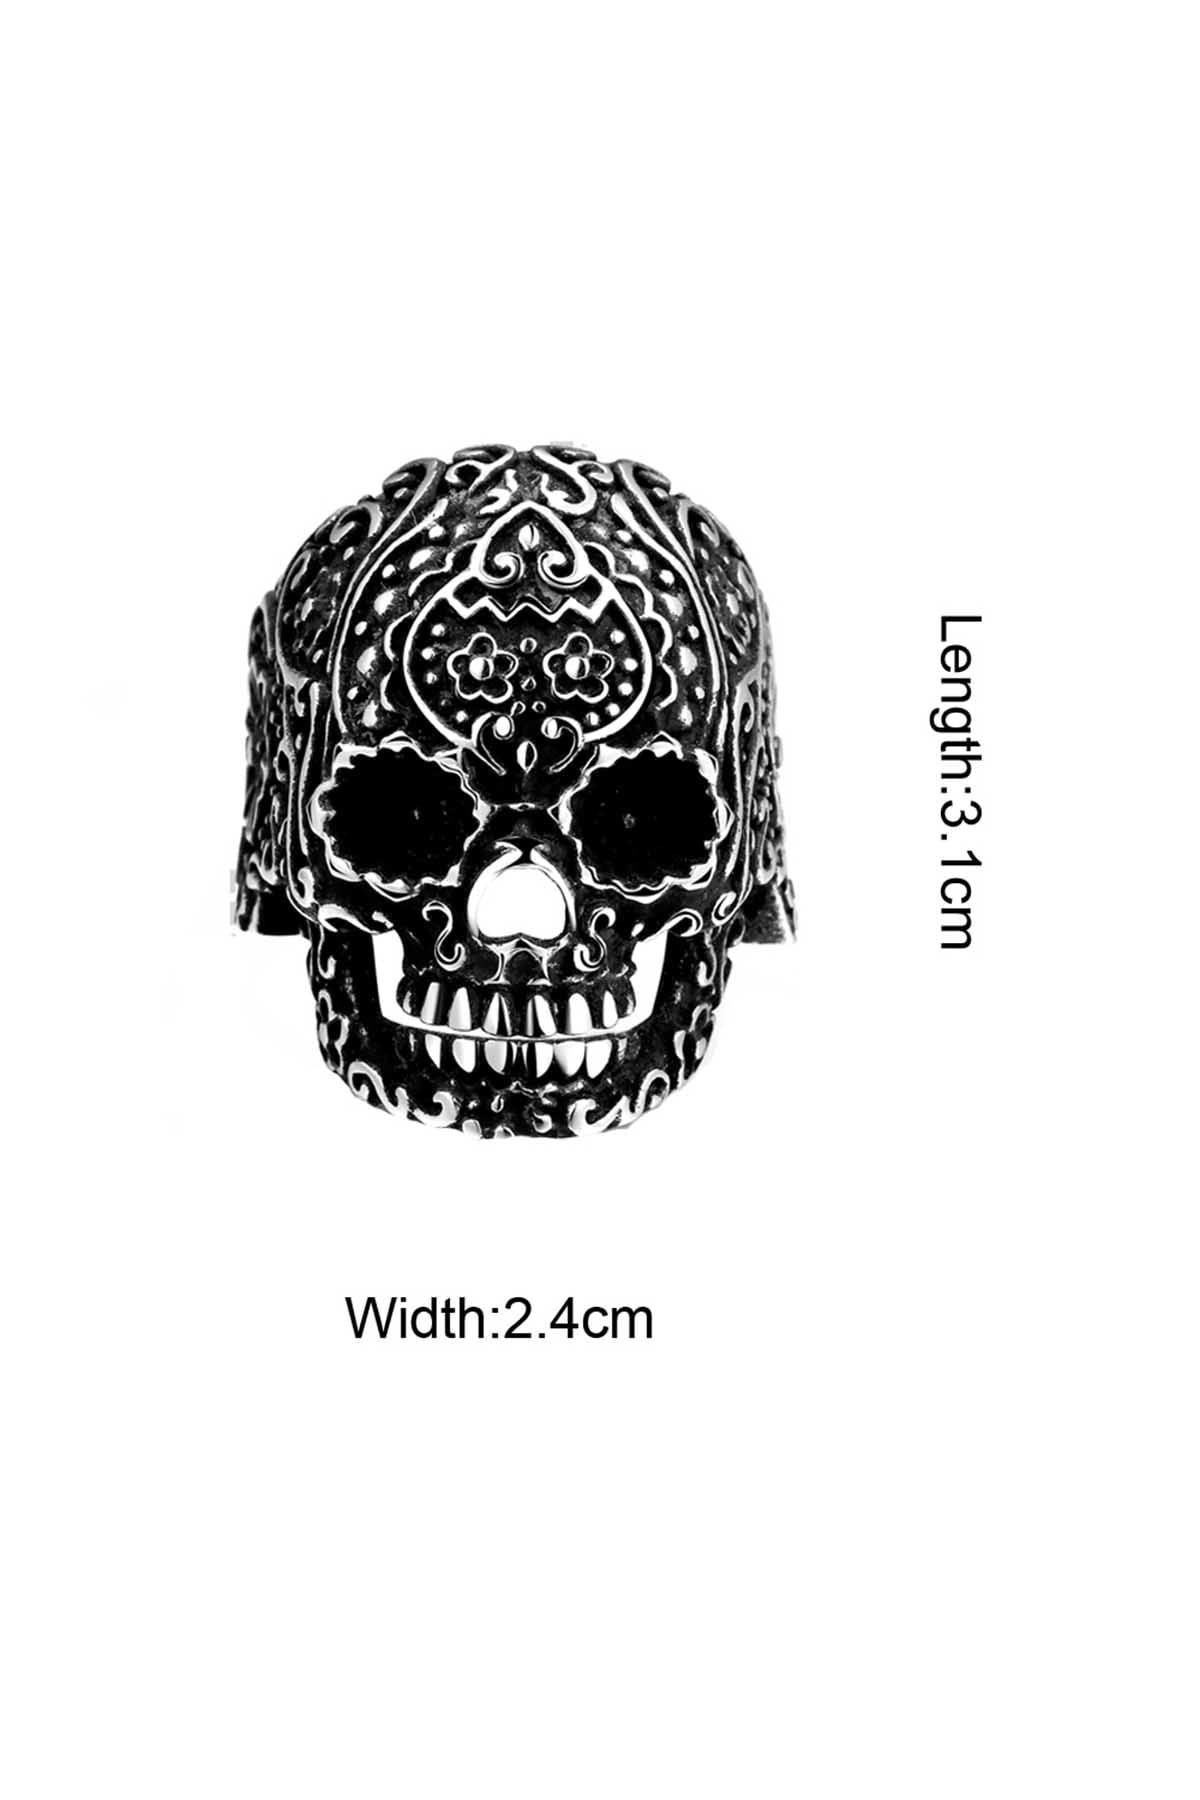 Gomaya Aztec Skull Stainless Steel Ring